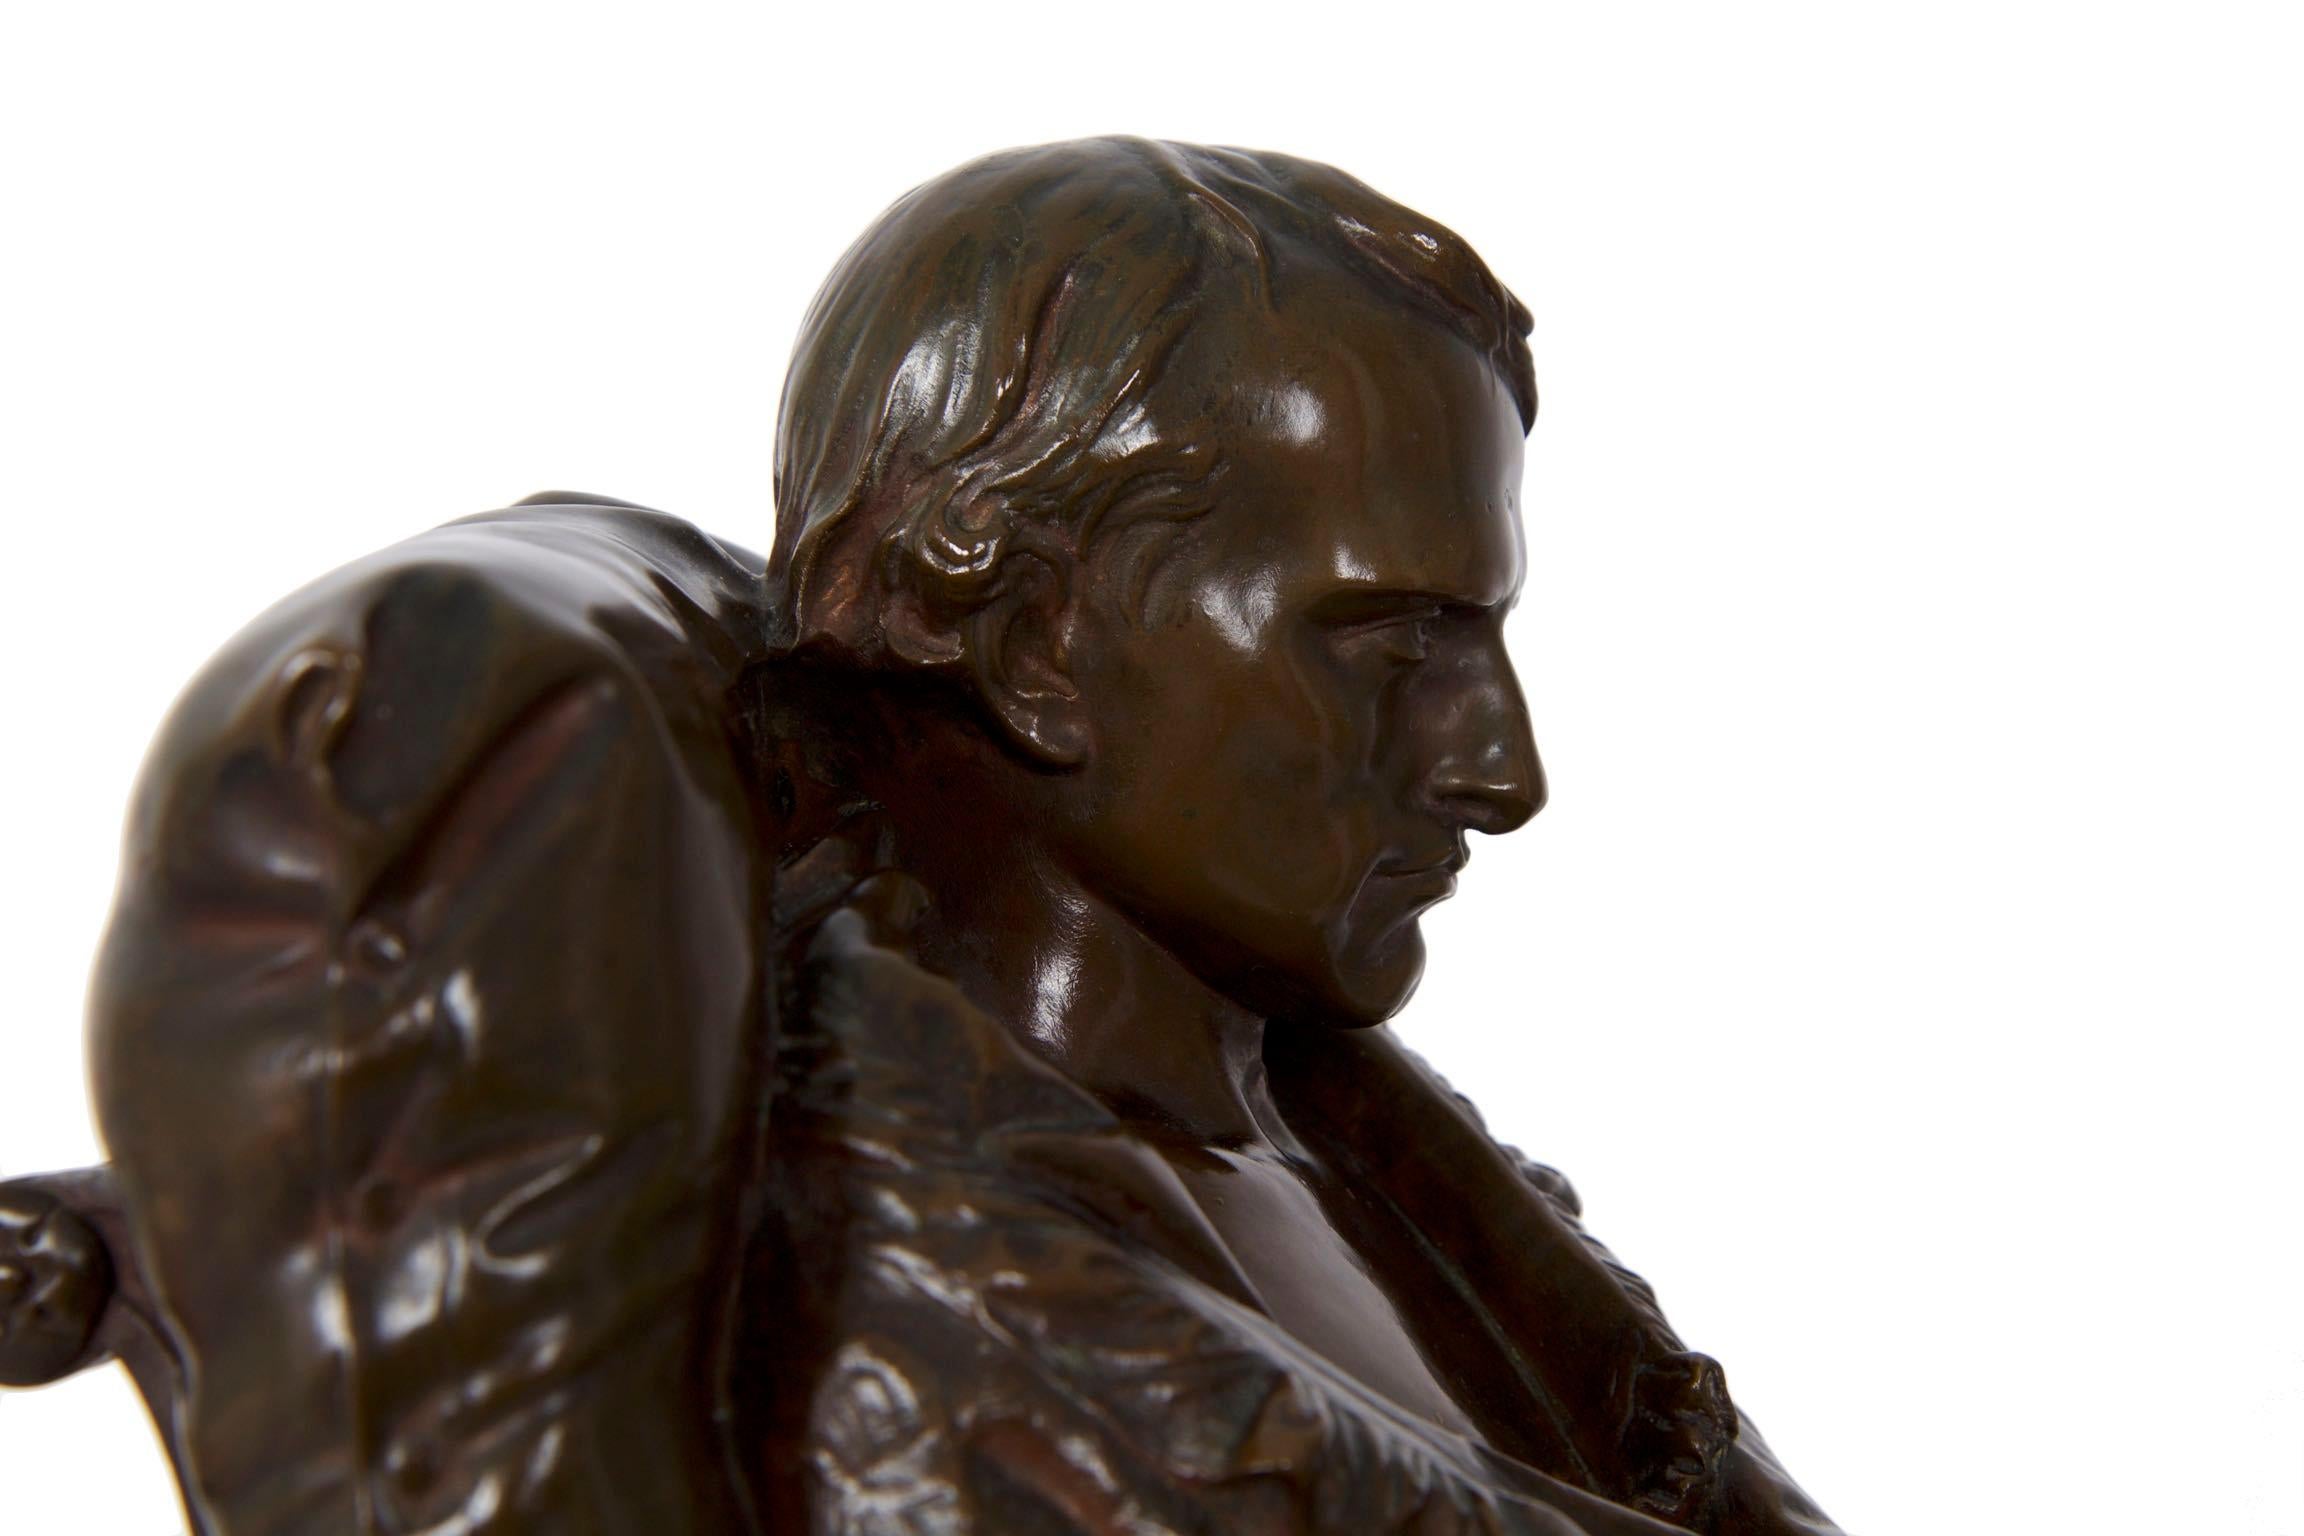 Bronze Sculpture “Last Days of Napoleon” after Model by Vincenzo Vela 1